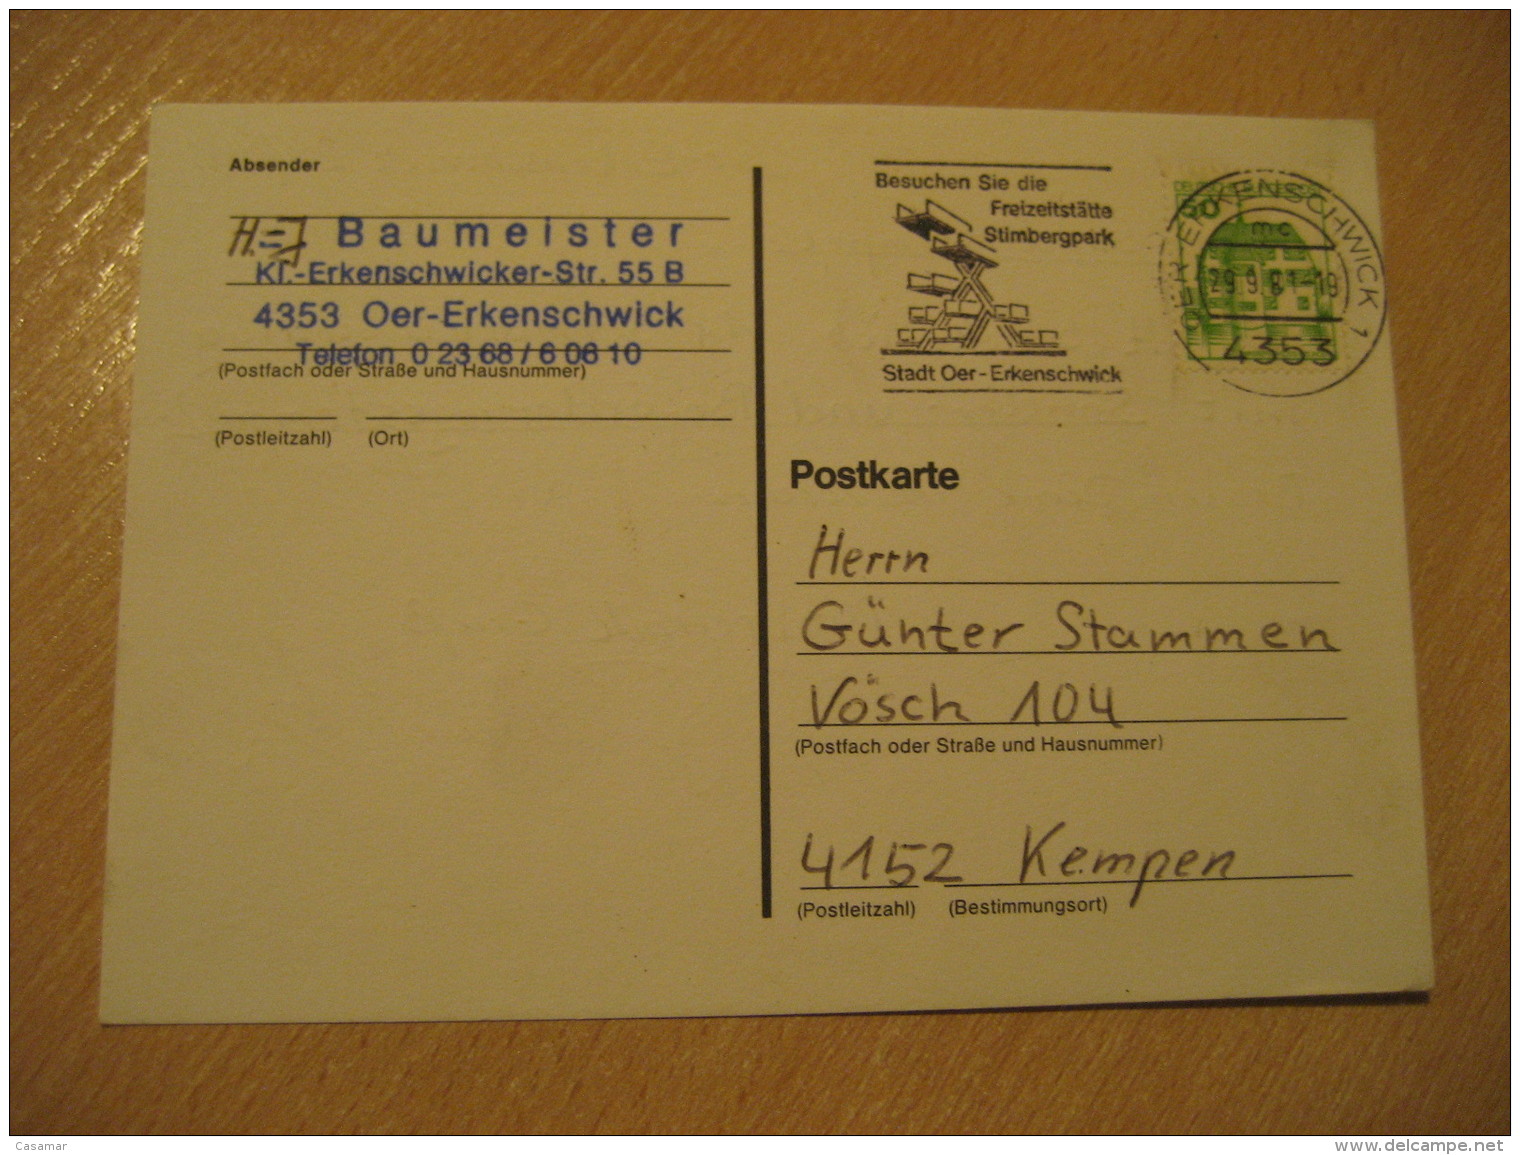 OER-ERKENSCHWICK 1981 DIVING Trampolin Saut Jump Swimming Cancel Card GERMANY - Tauchen